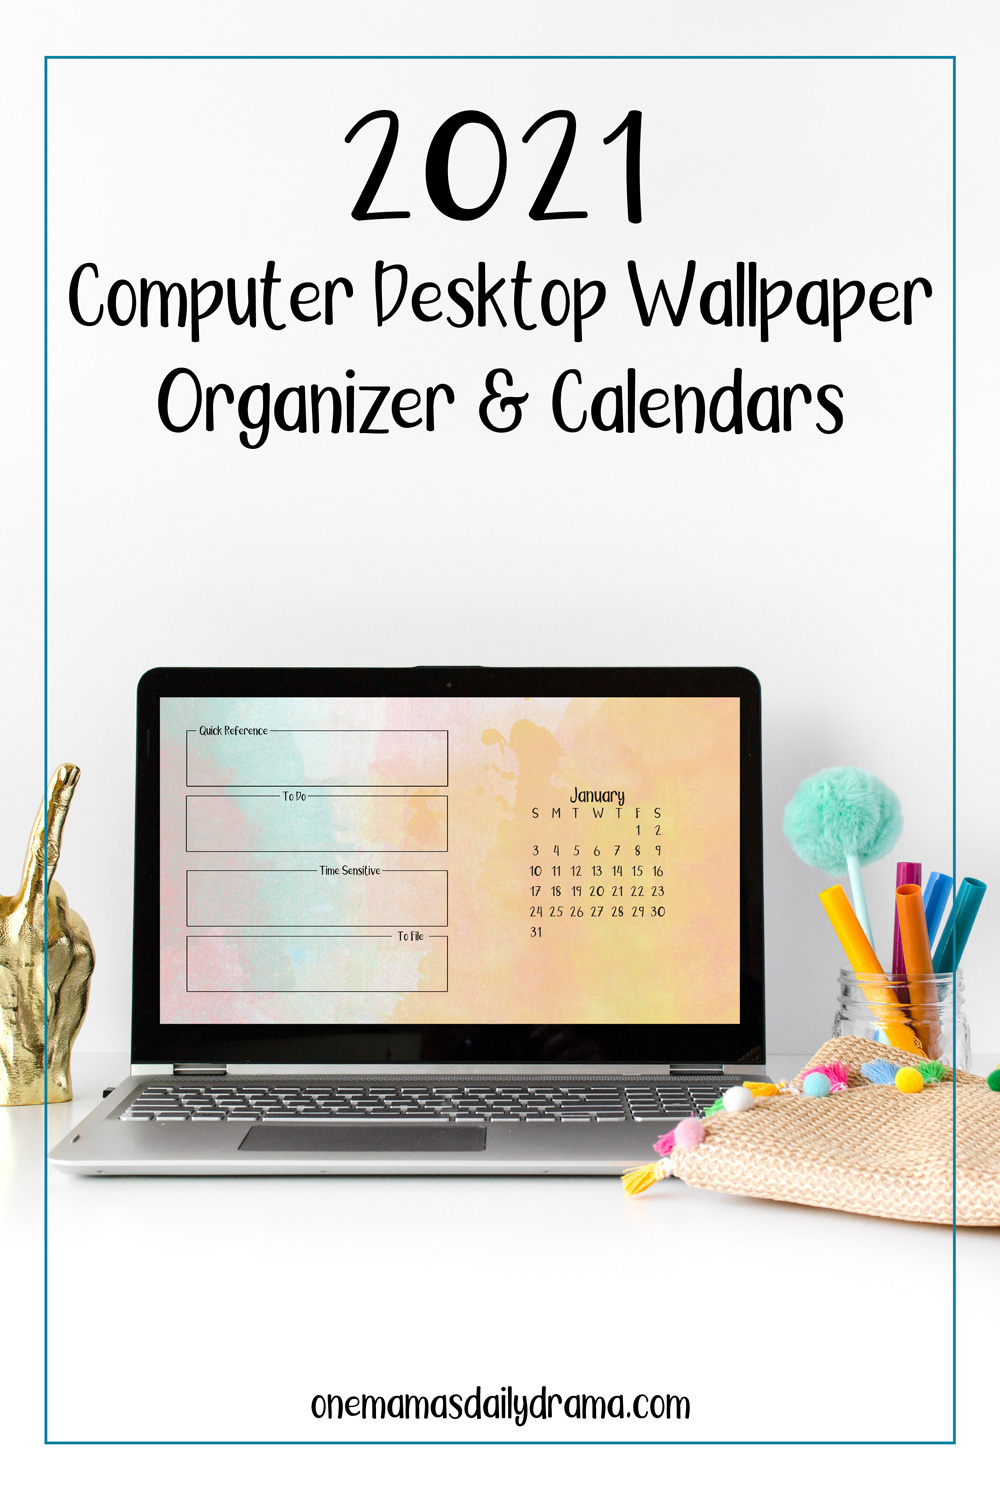 Student Desktop Organizer Wallpapers